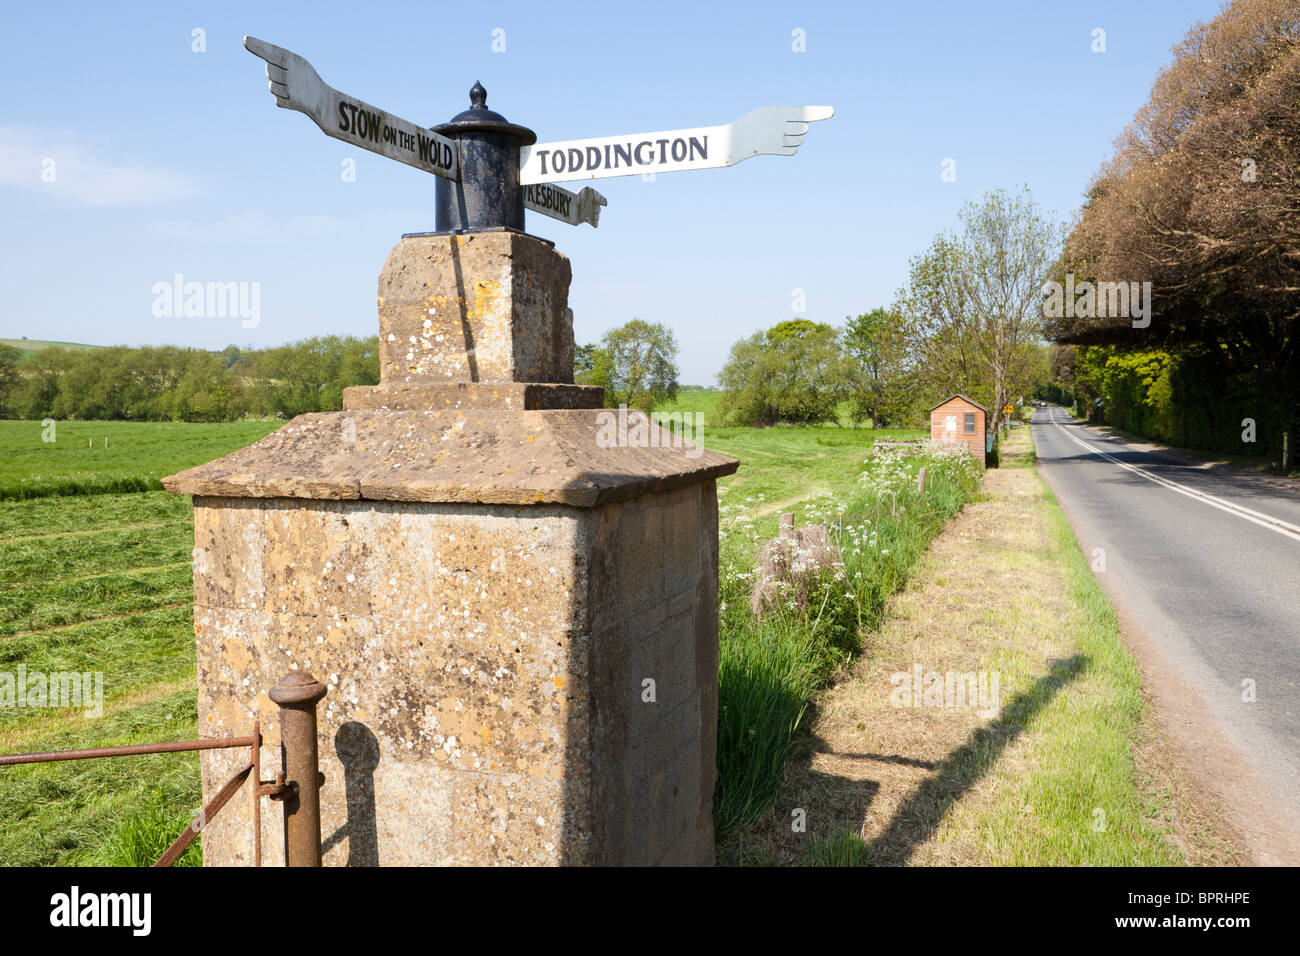 Xviii secolo fingerpost accanto alla B4077 Stow a Tewkesbury road a Toddington, Gloucestershire Foto Stock